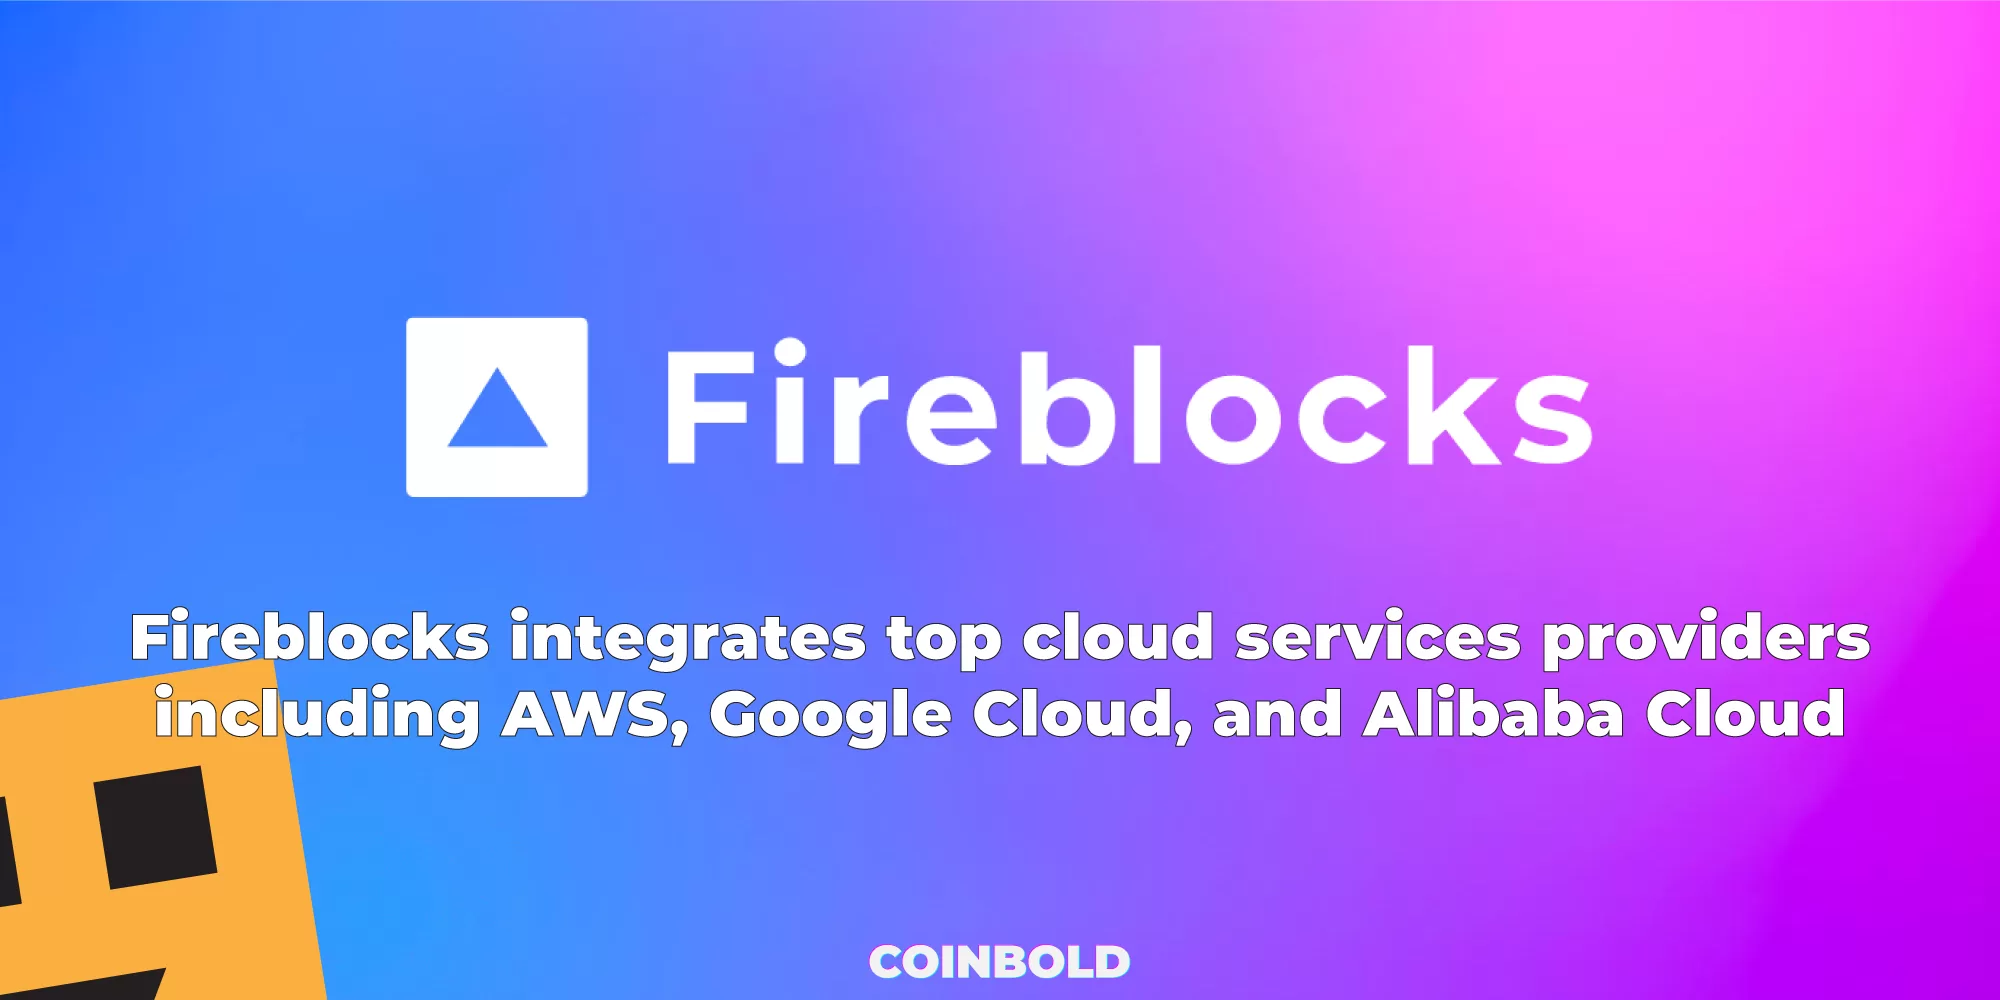 Fireblocks integrates top cloud services providers including AWS, Google Cloud, and Alibaba Cloud